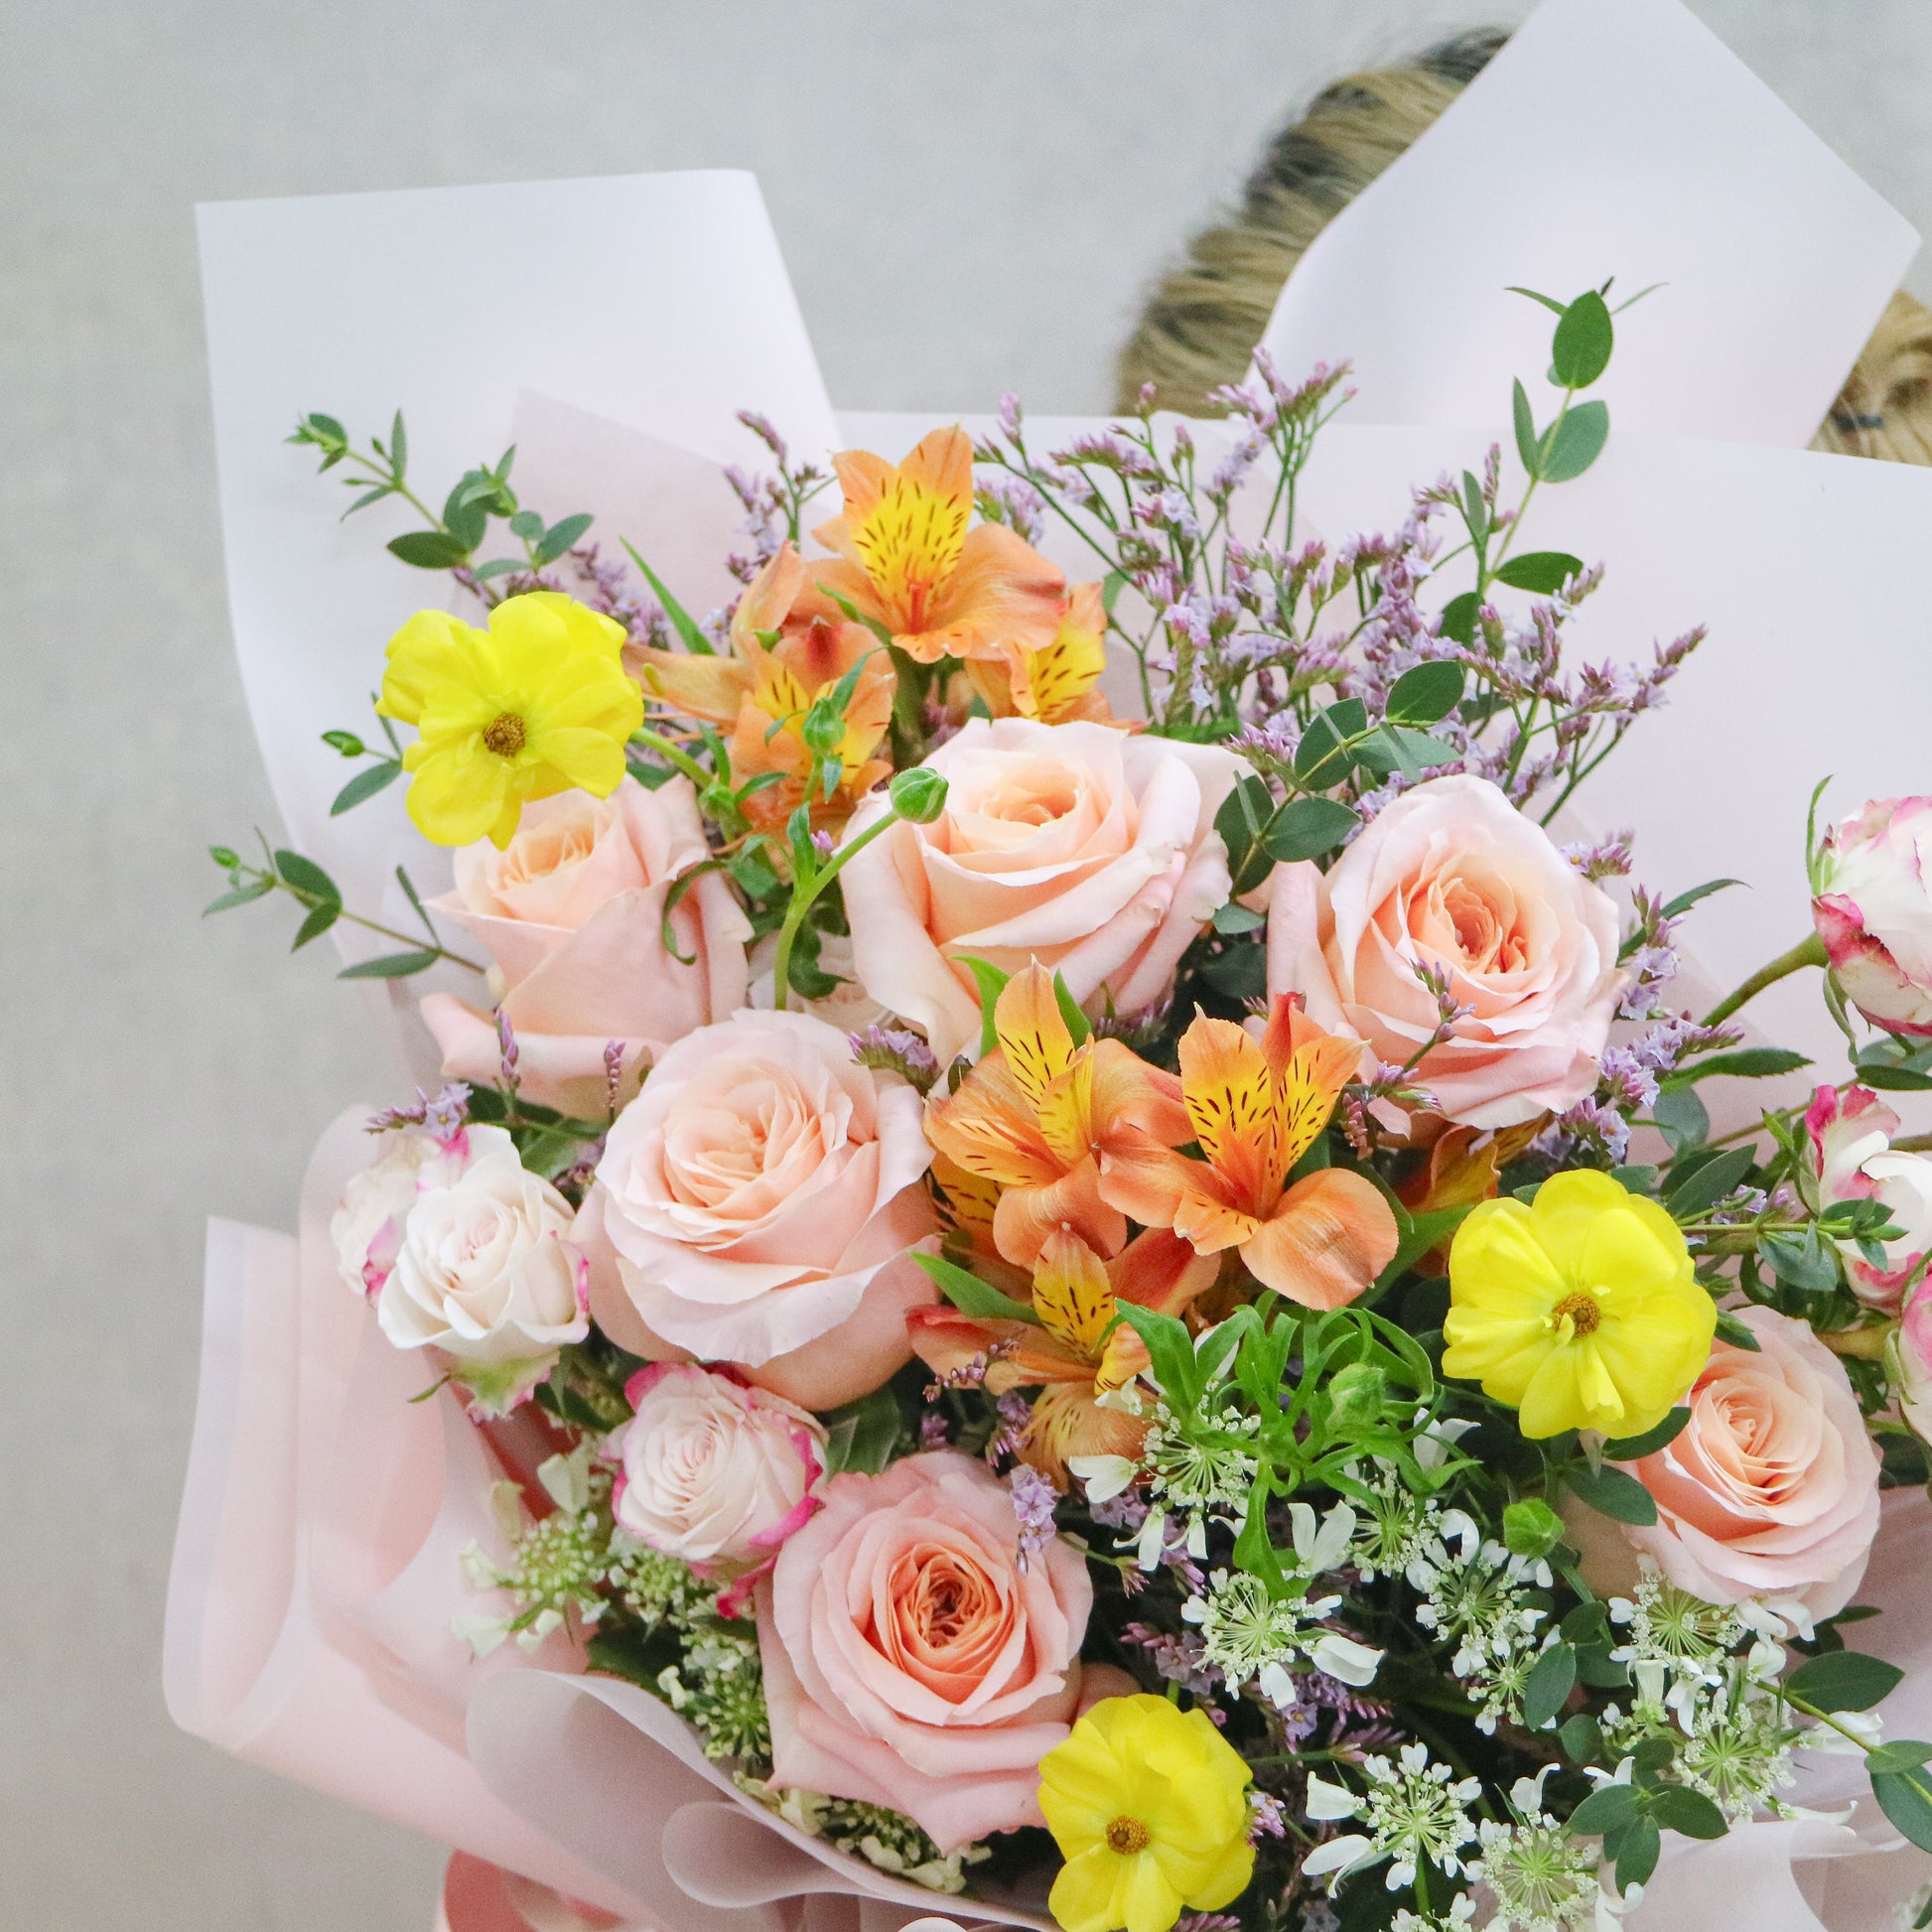 粉橙玫瑰小百合花束 Peach rose and alstroemeria bouquet